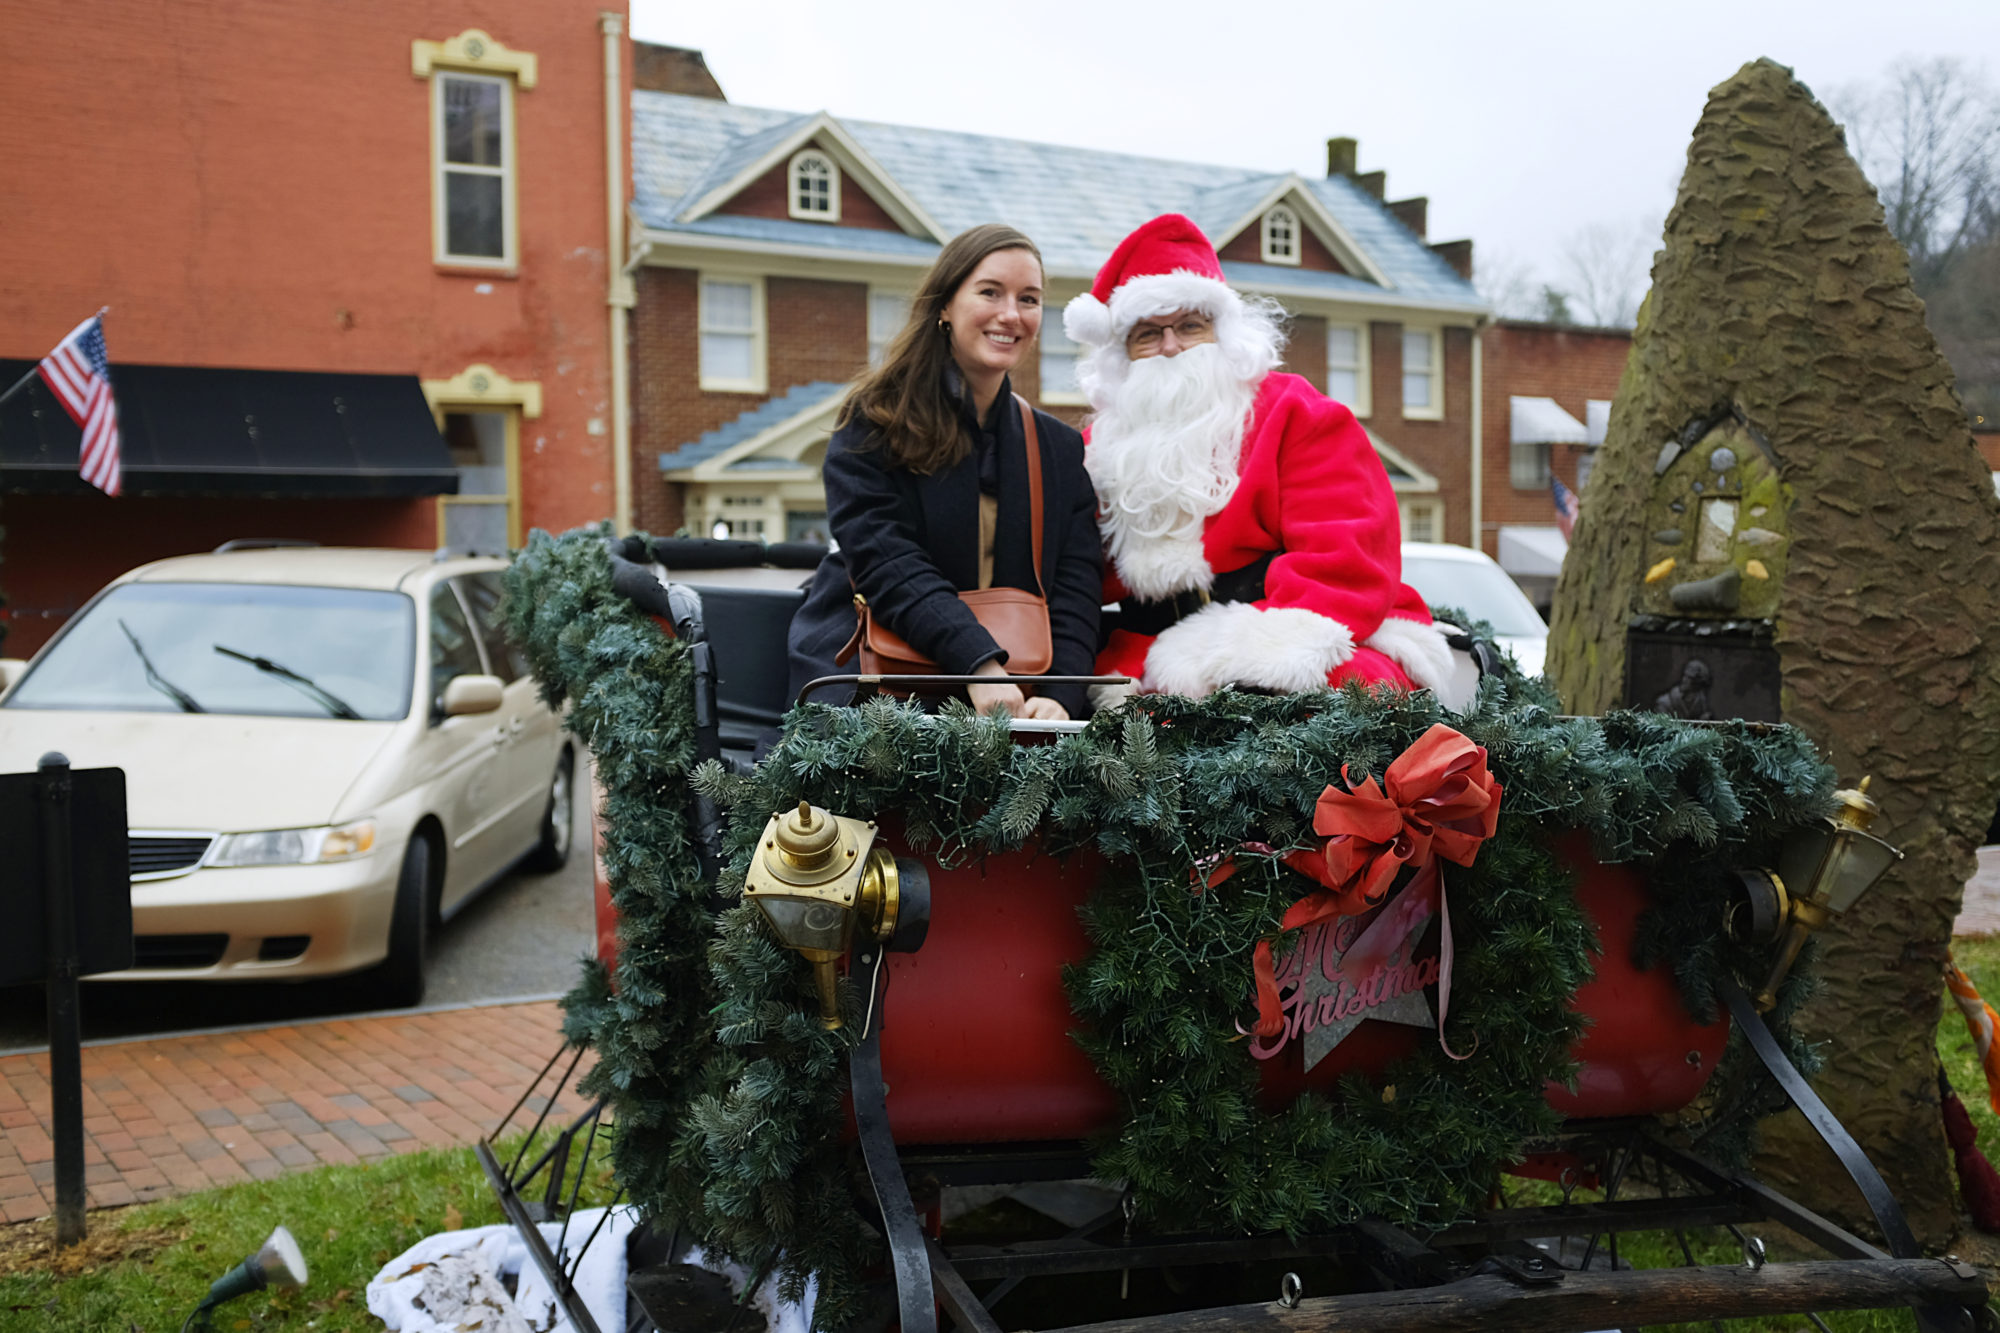 Alyssa sits with Santa in a sleigh